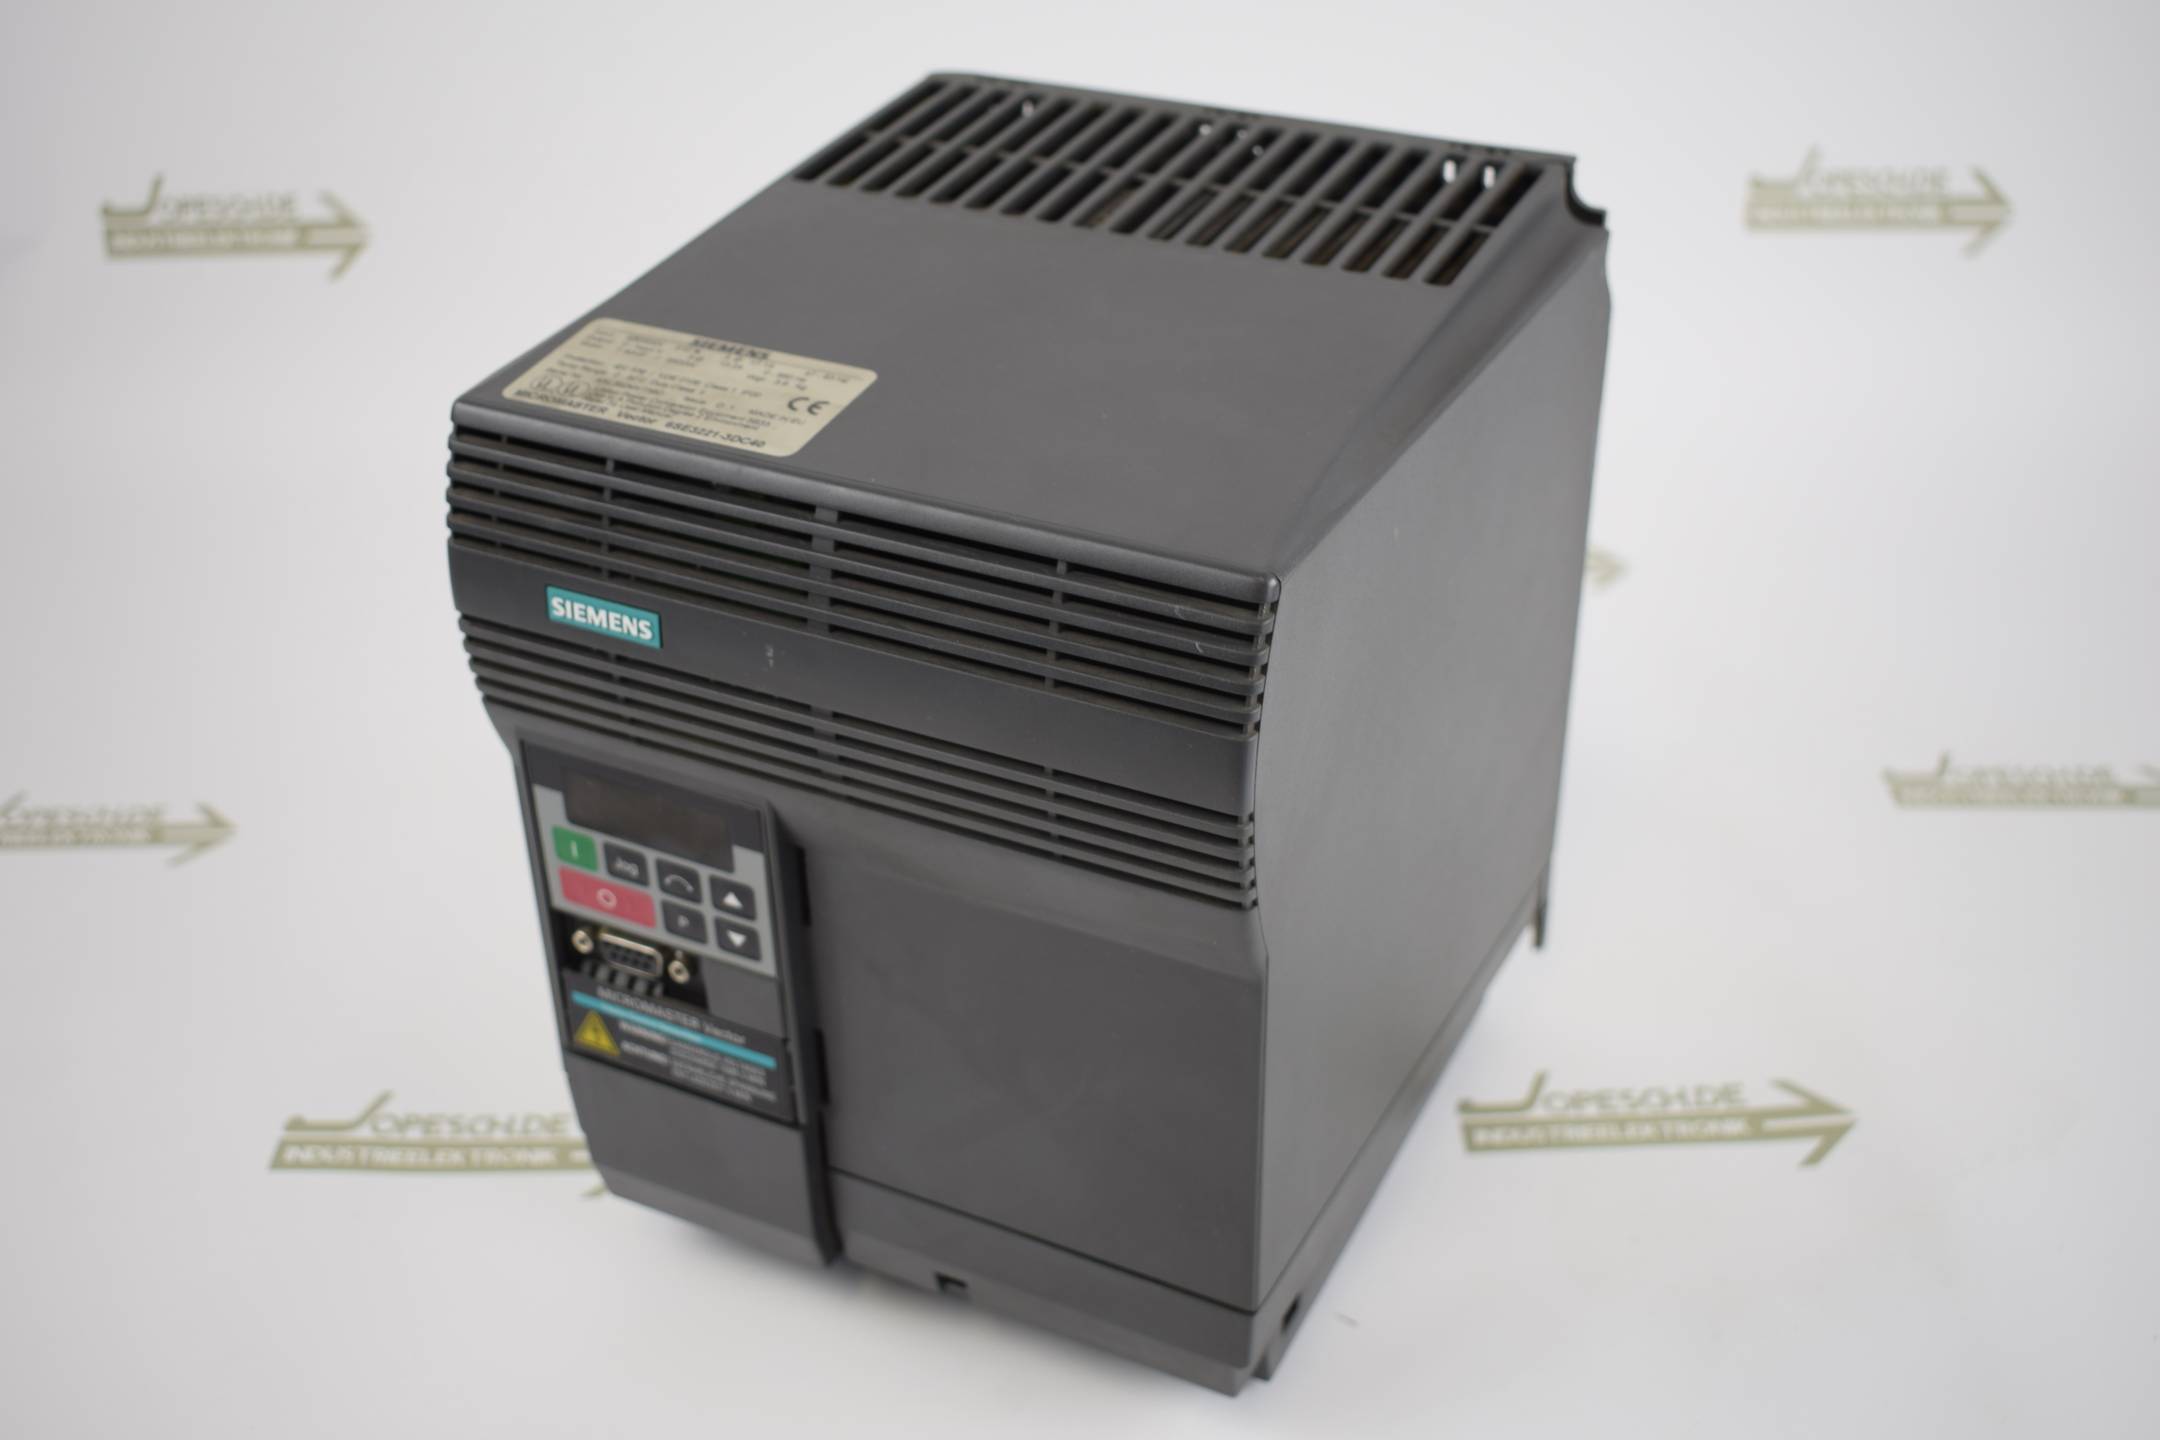 Siemens micromaster Vector 6SE3221-3DC40